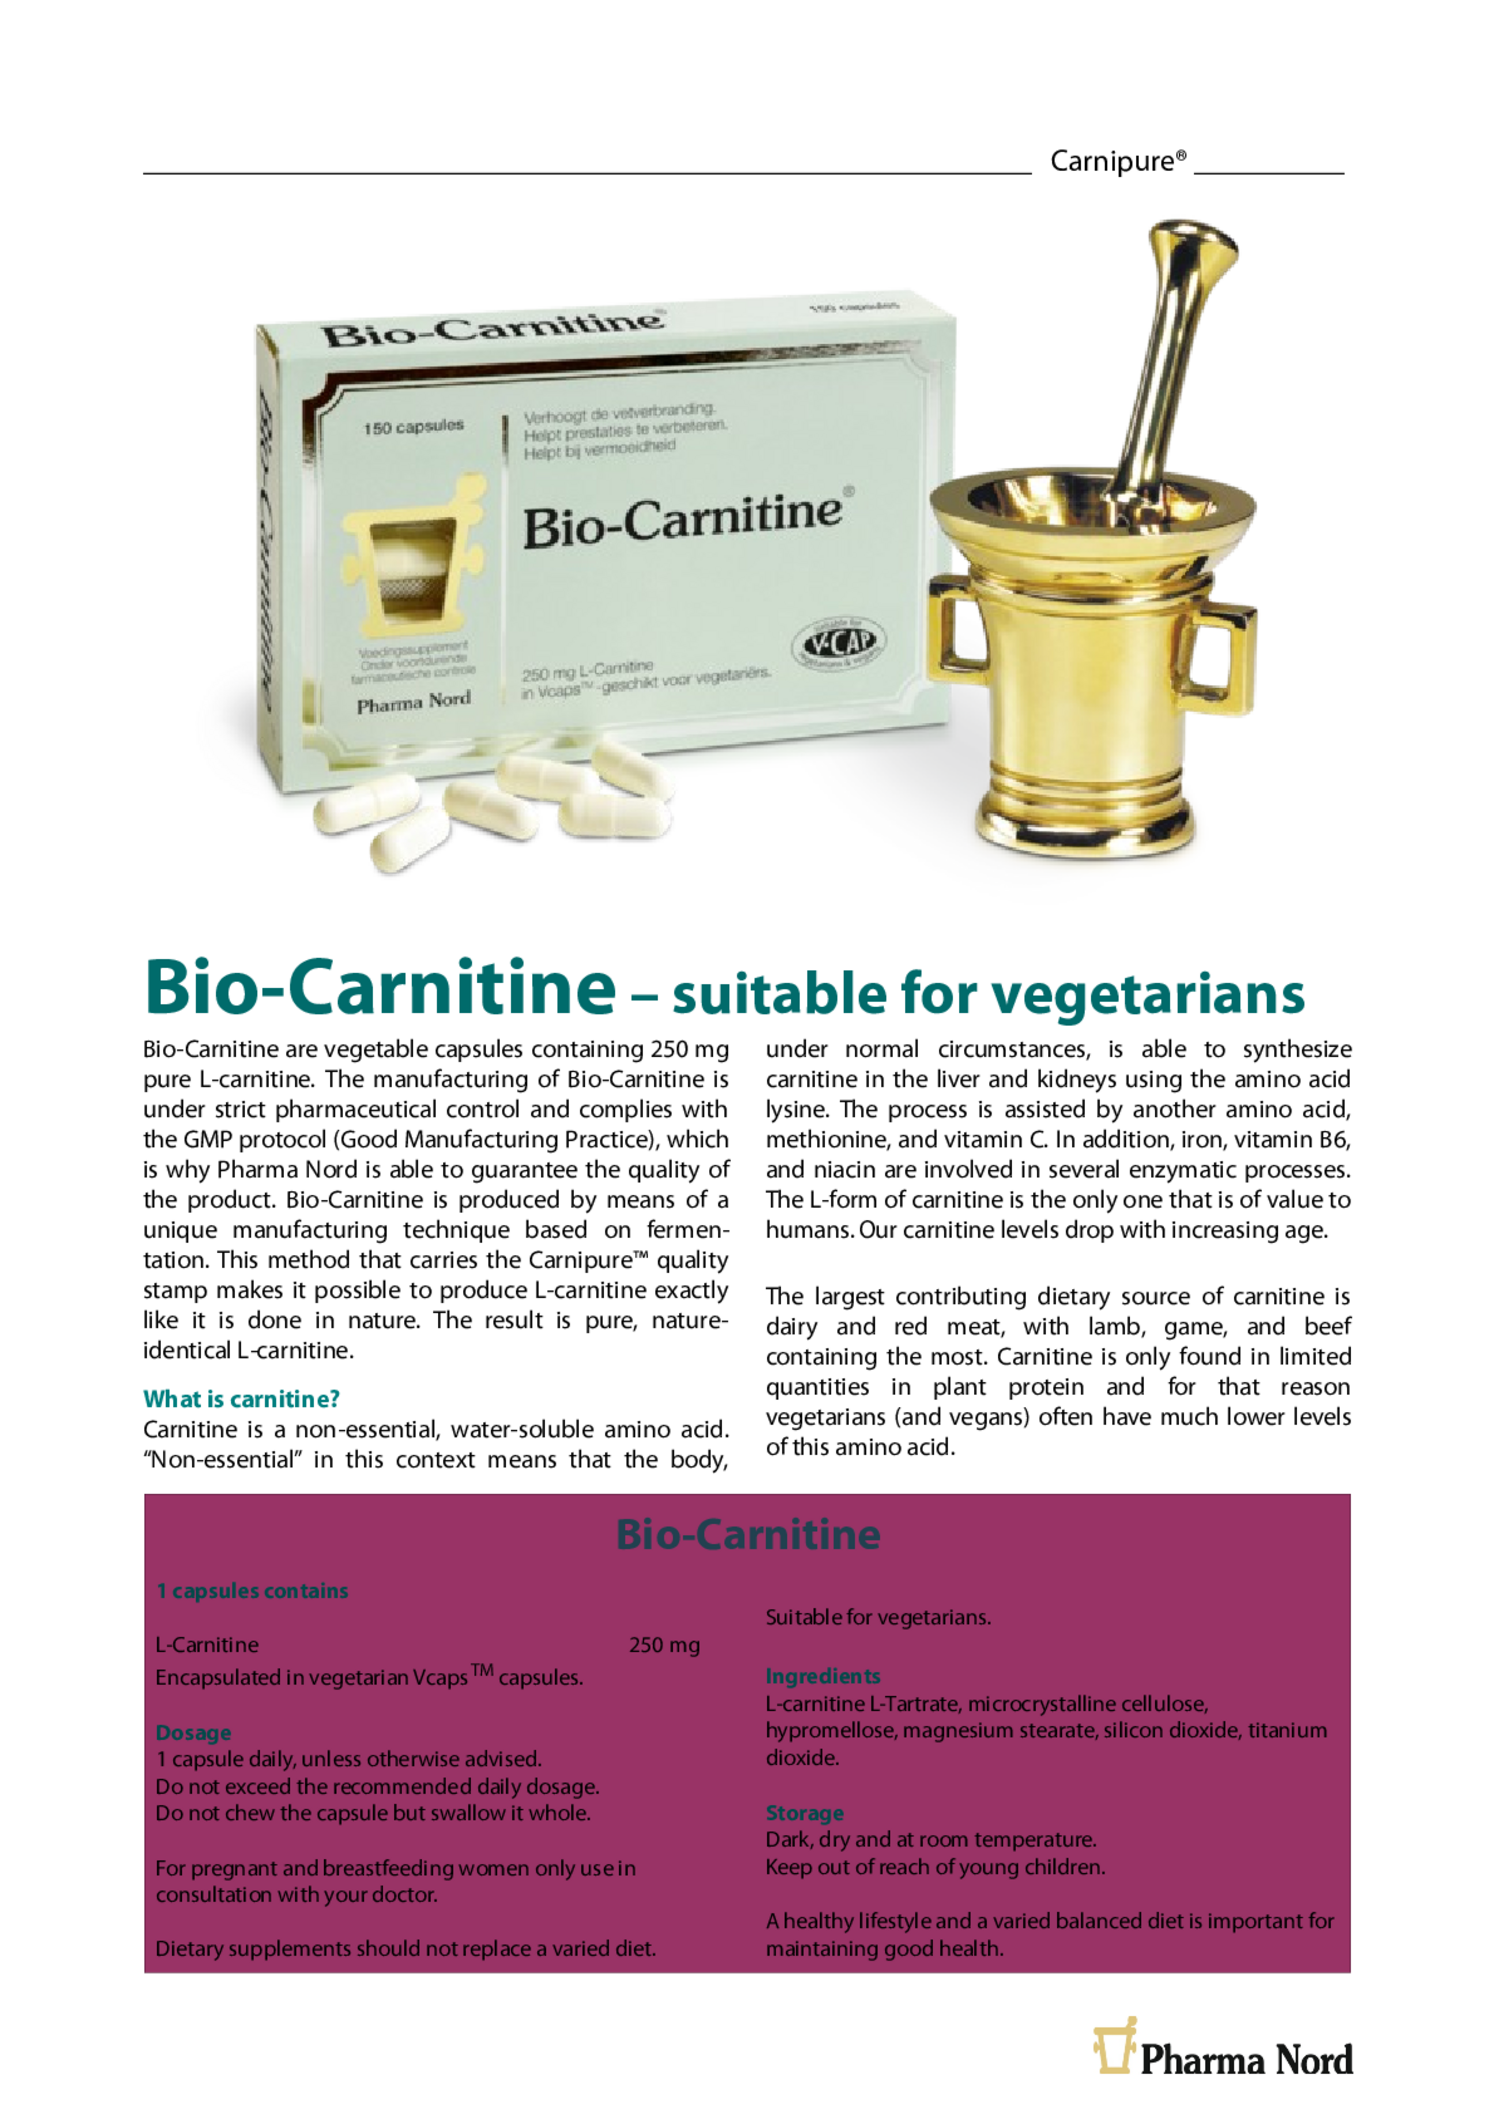 Bio-Carnitine Capsules afbeelding van document #1, gebruiksaanwijzing